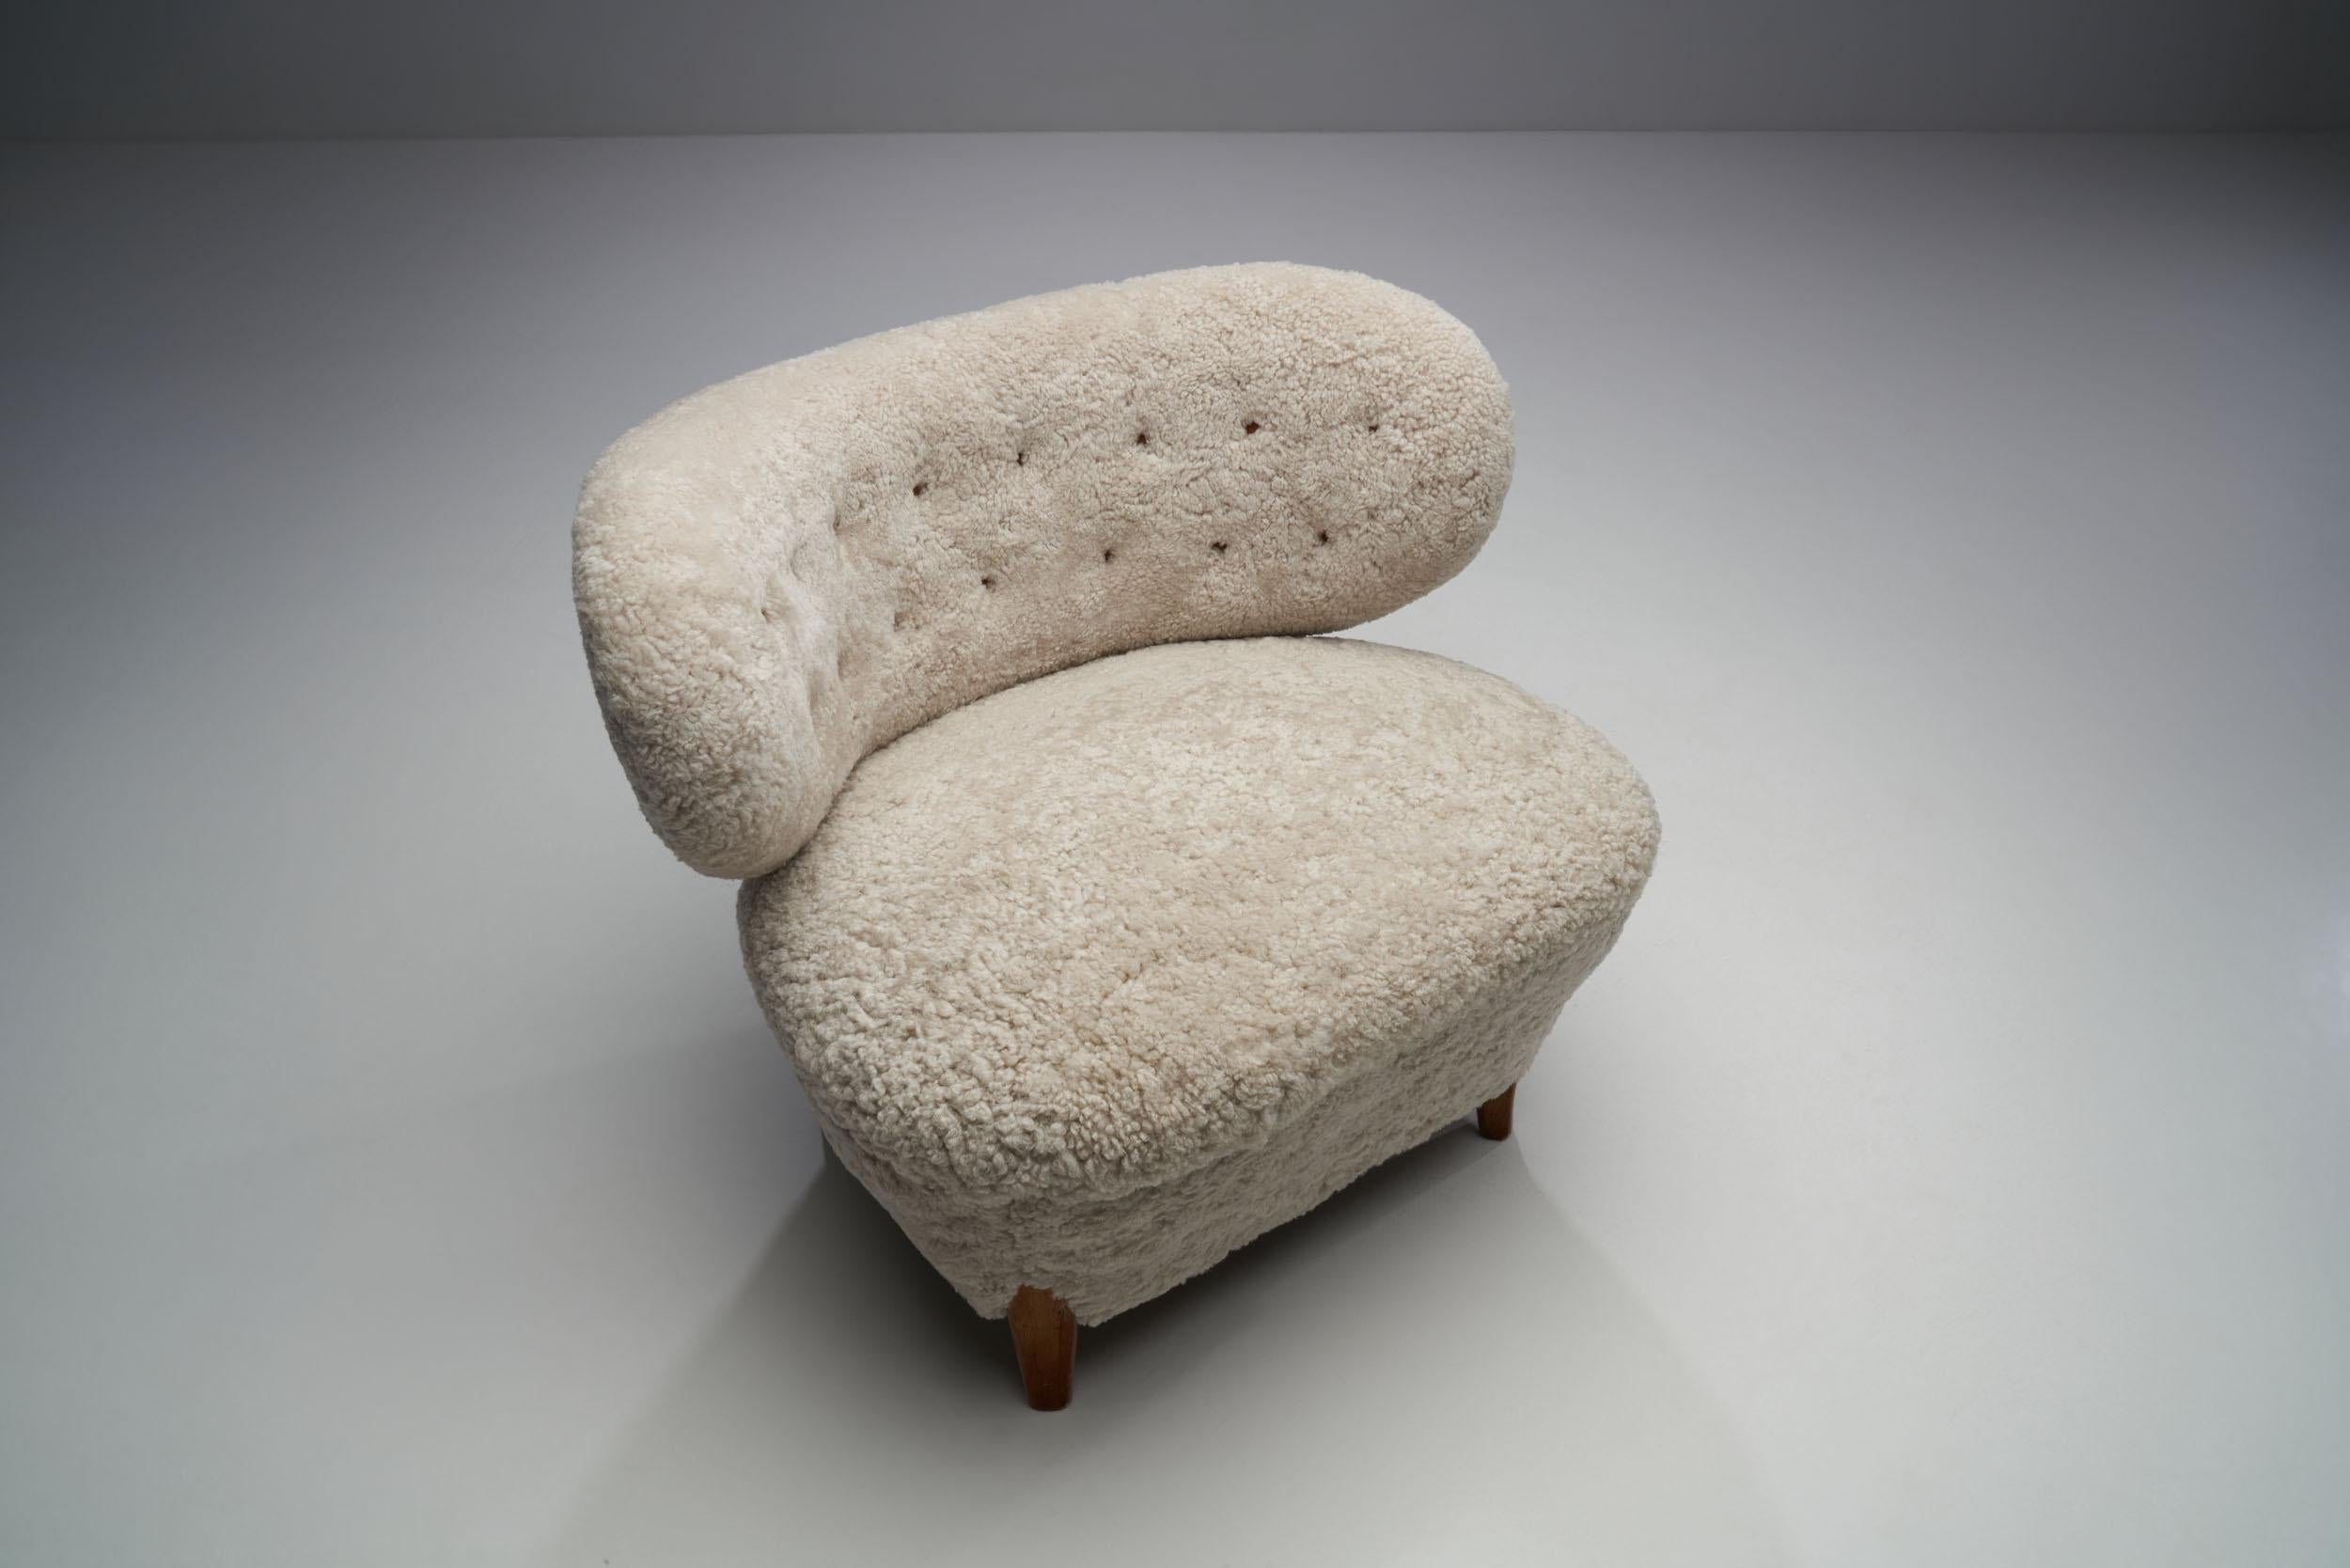 Sheepskin “Schulz” Lounge Chair by Otto Schulz for Jio Möbler Jönköping, Sweden circa 1940